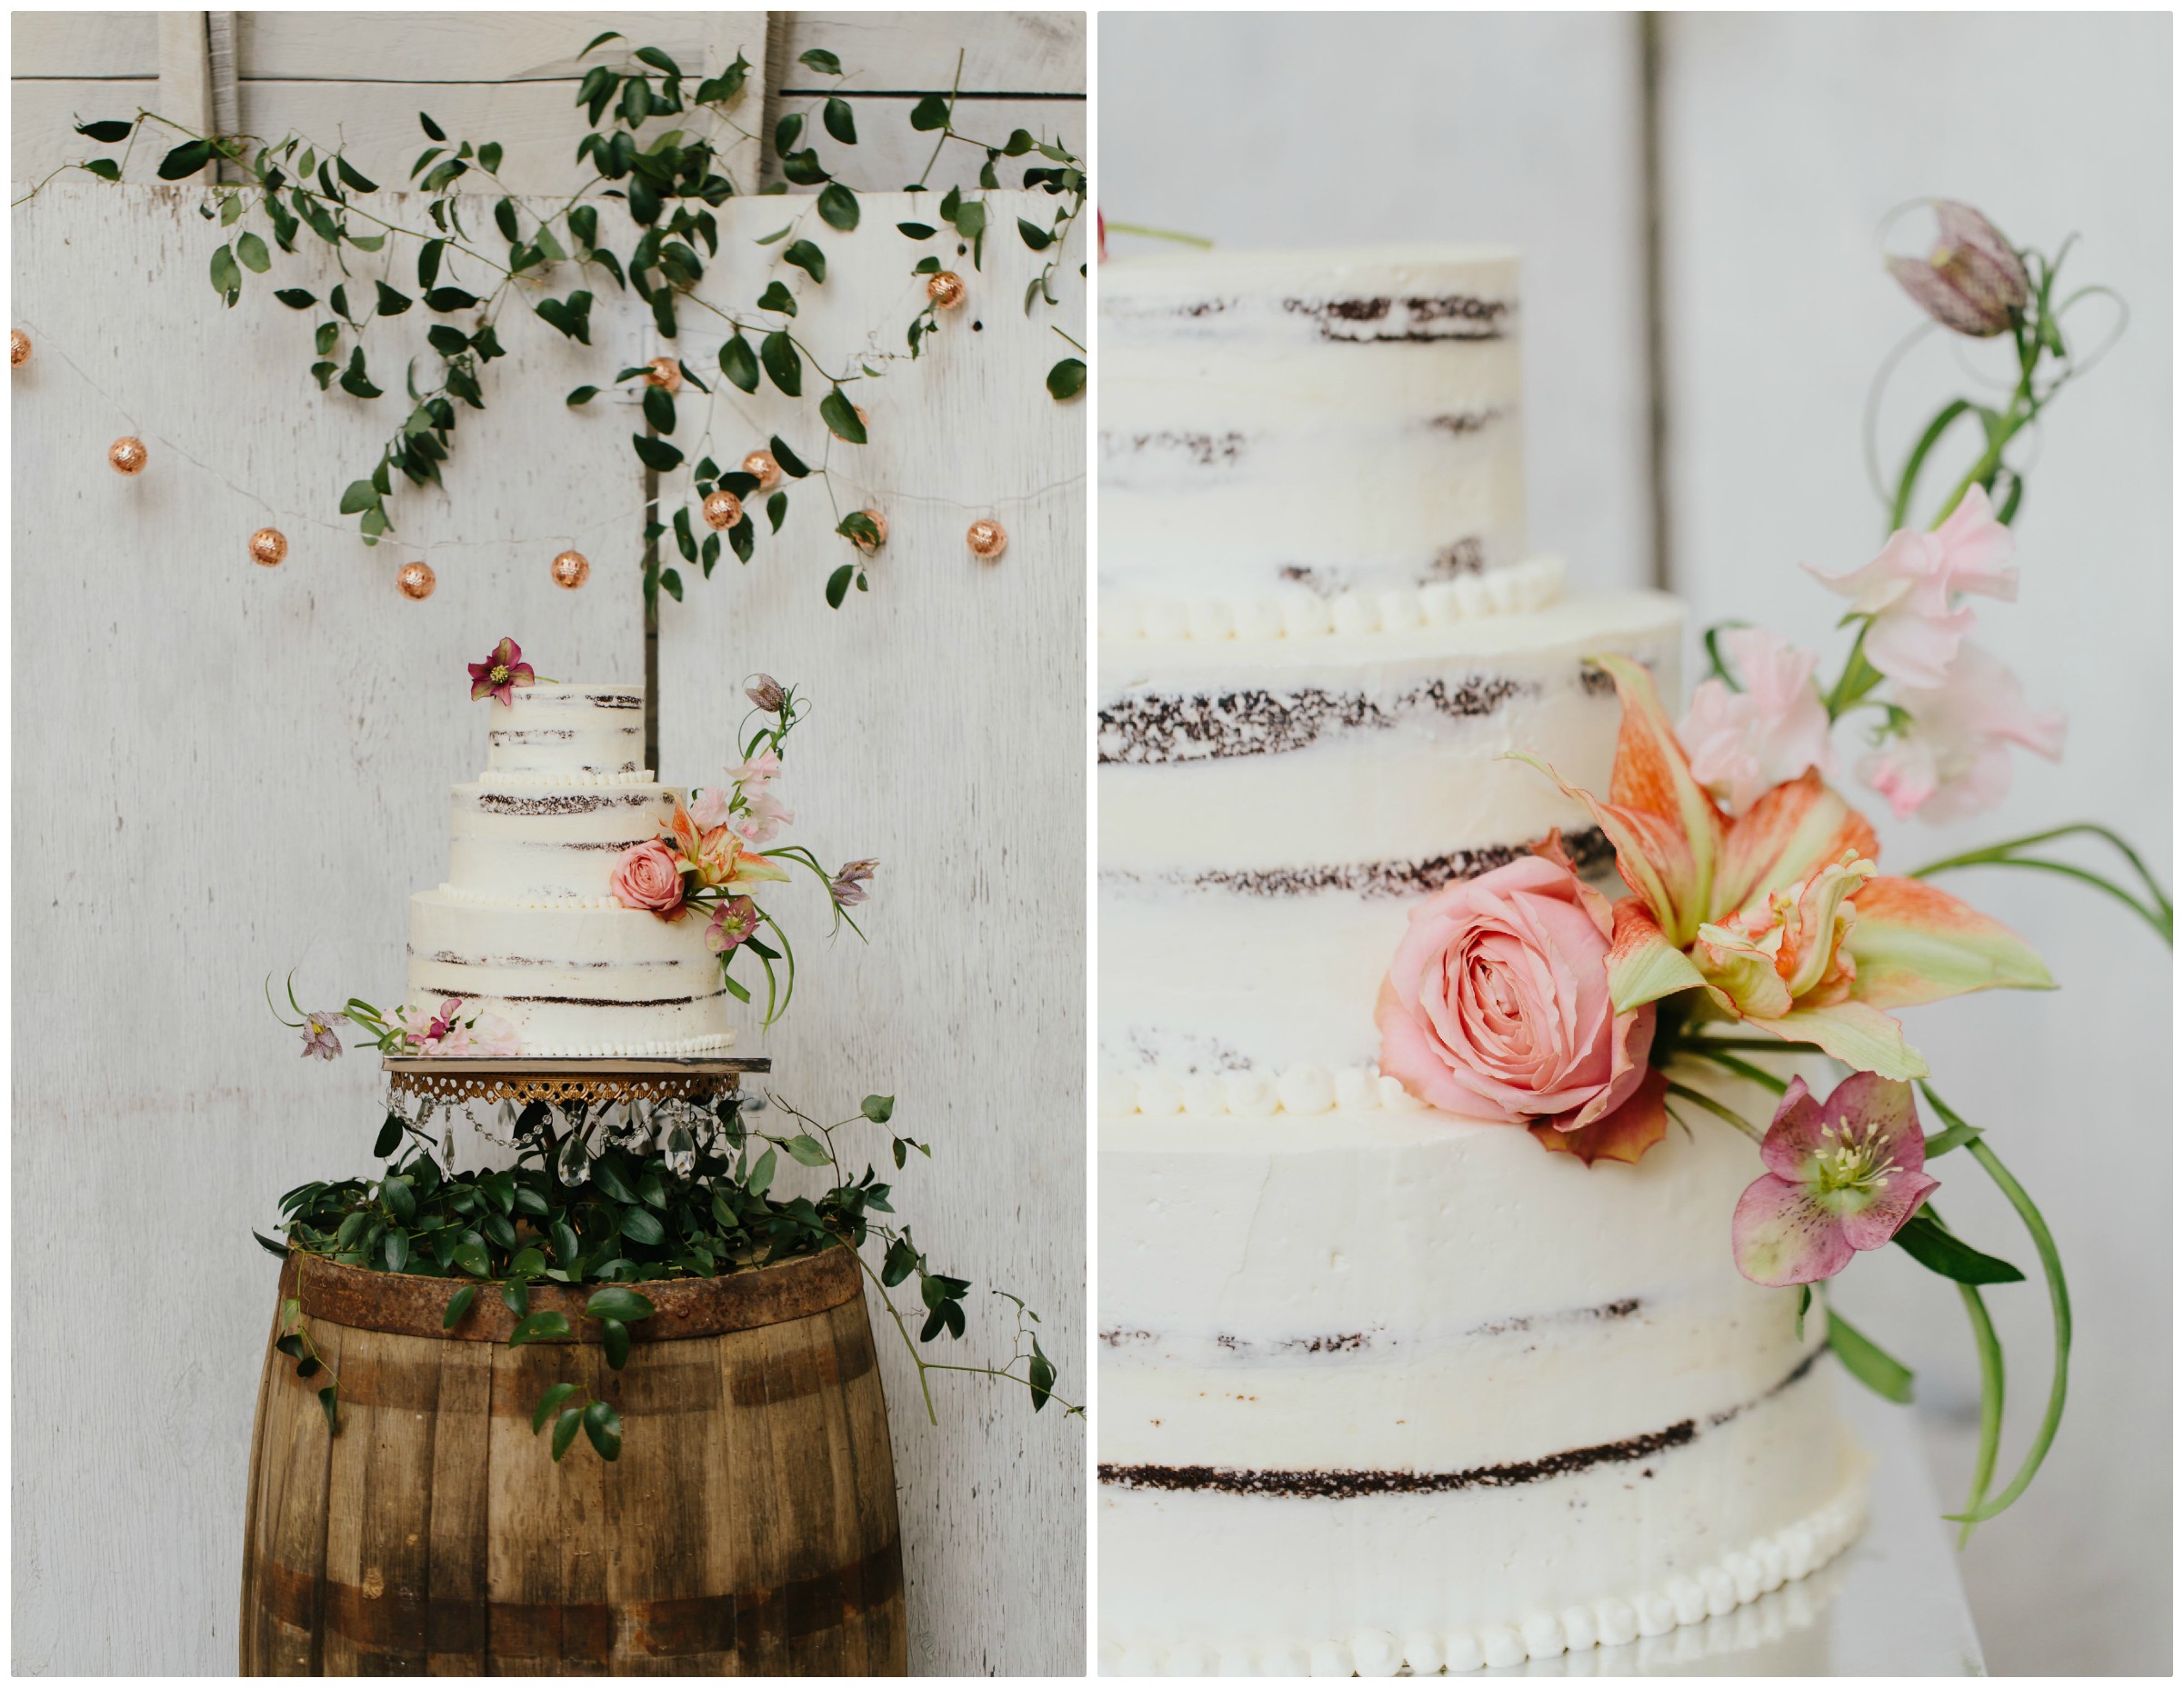 Burgundy & Blush WRustic Wedding Cake | The Day's Design | Katie Grace Photography